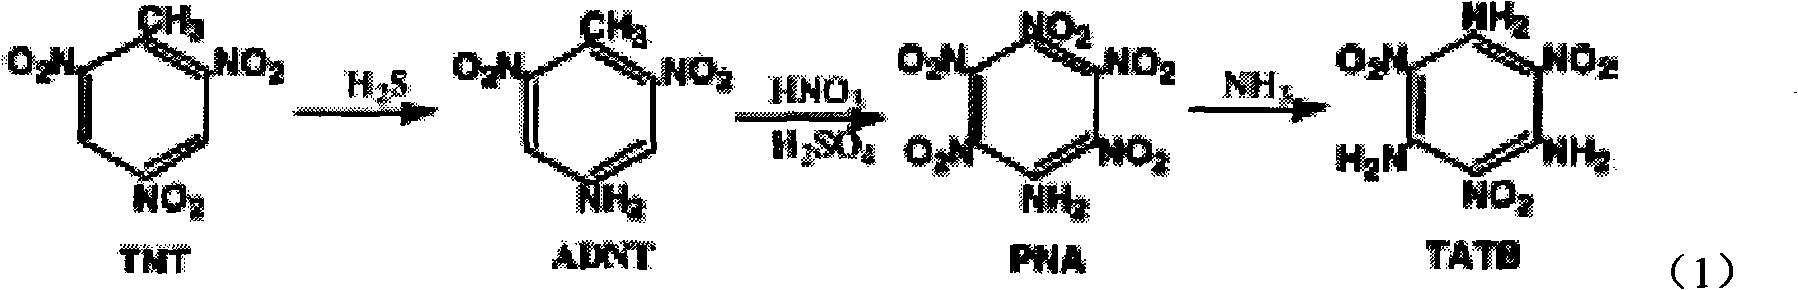 Method for synthesizing tri-amino trinitrobenzene (TATB) by trinitrotoluene (TNT)